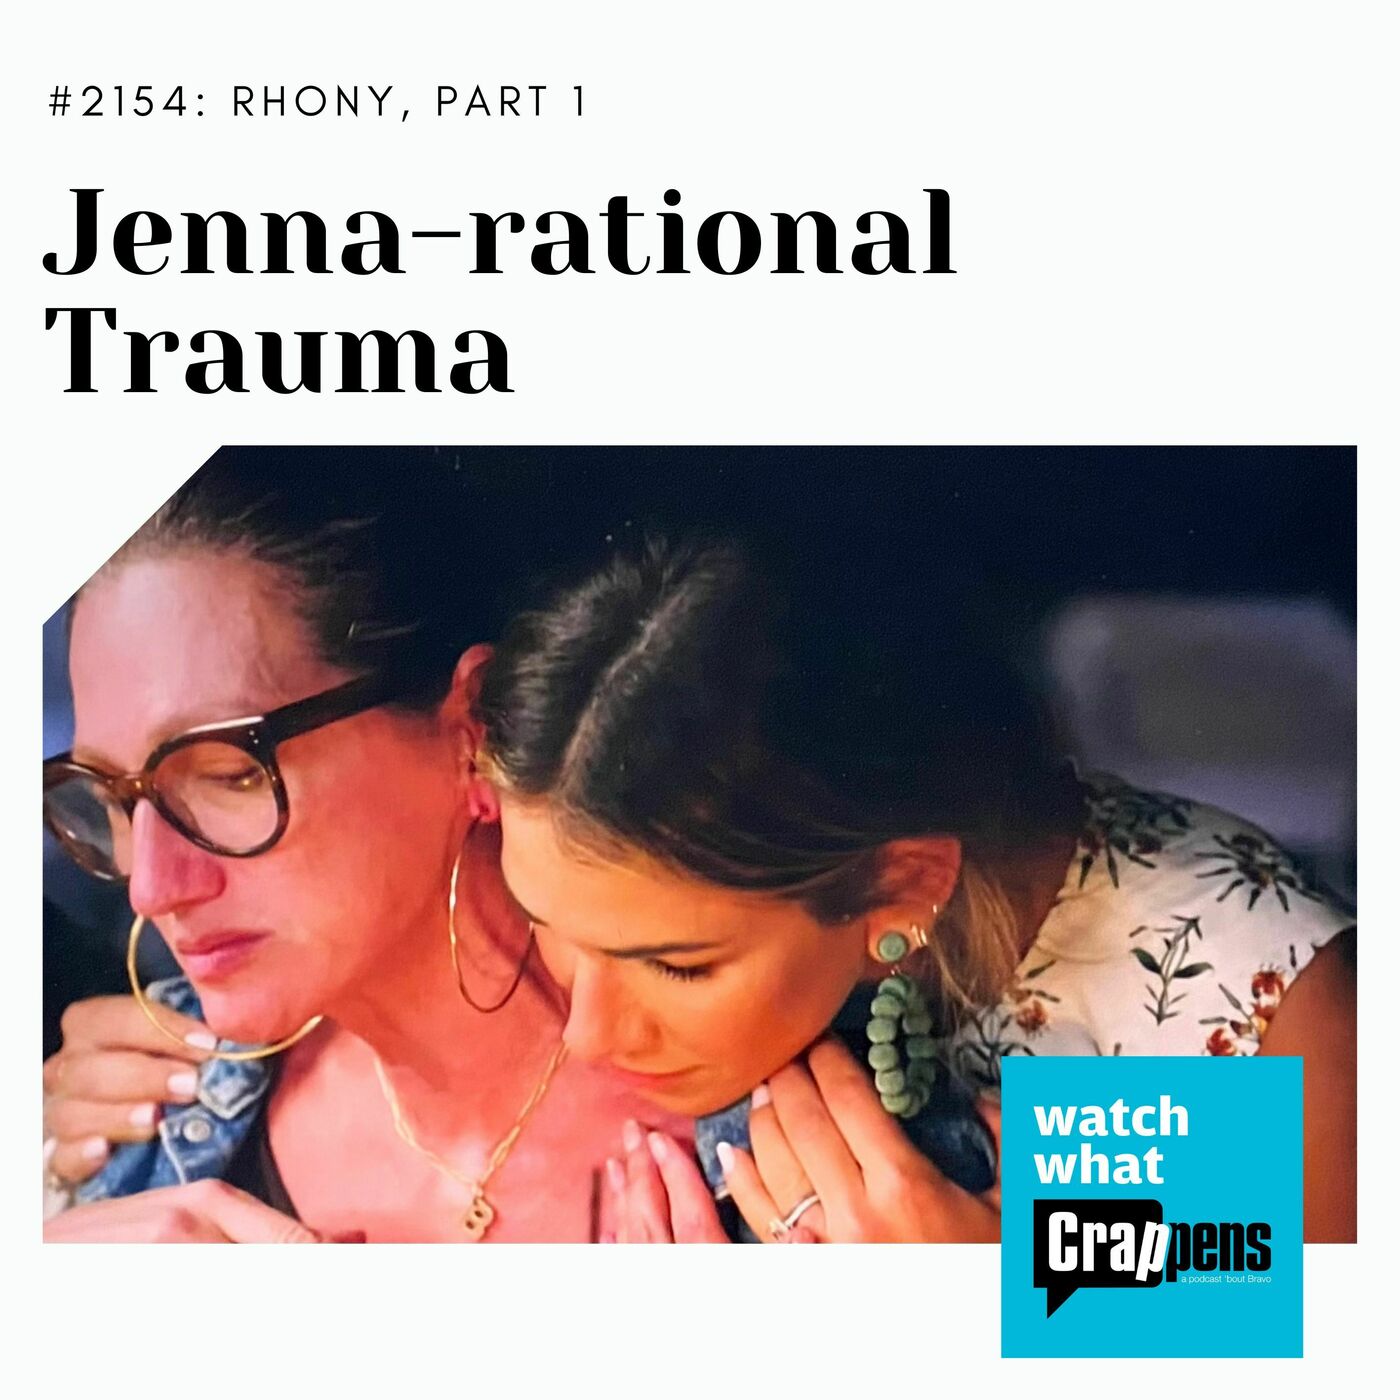 RHONY Part 1: Jenna-rational Trauma